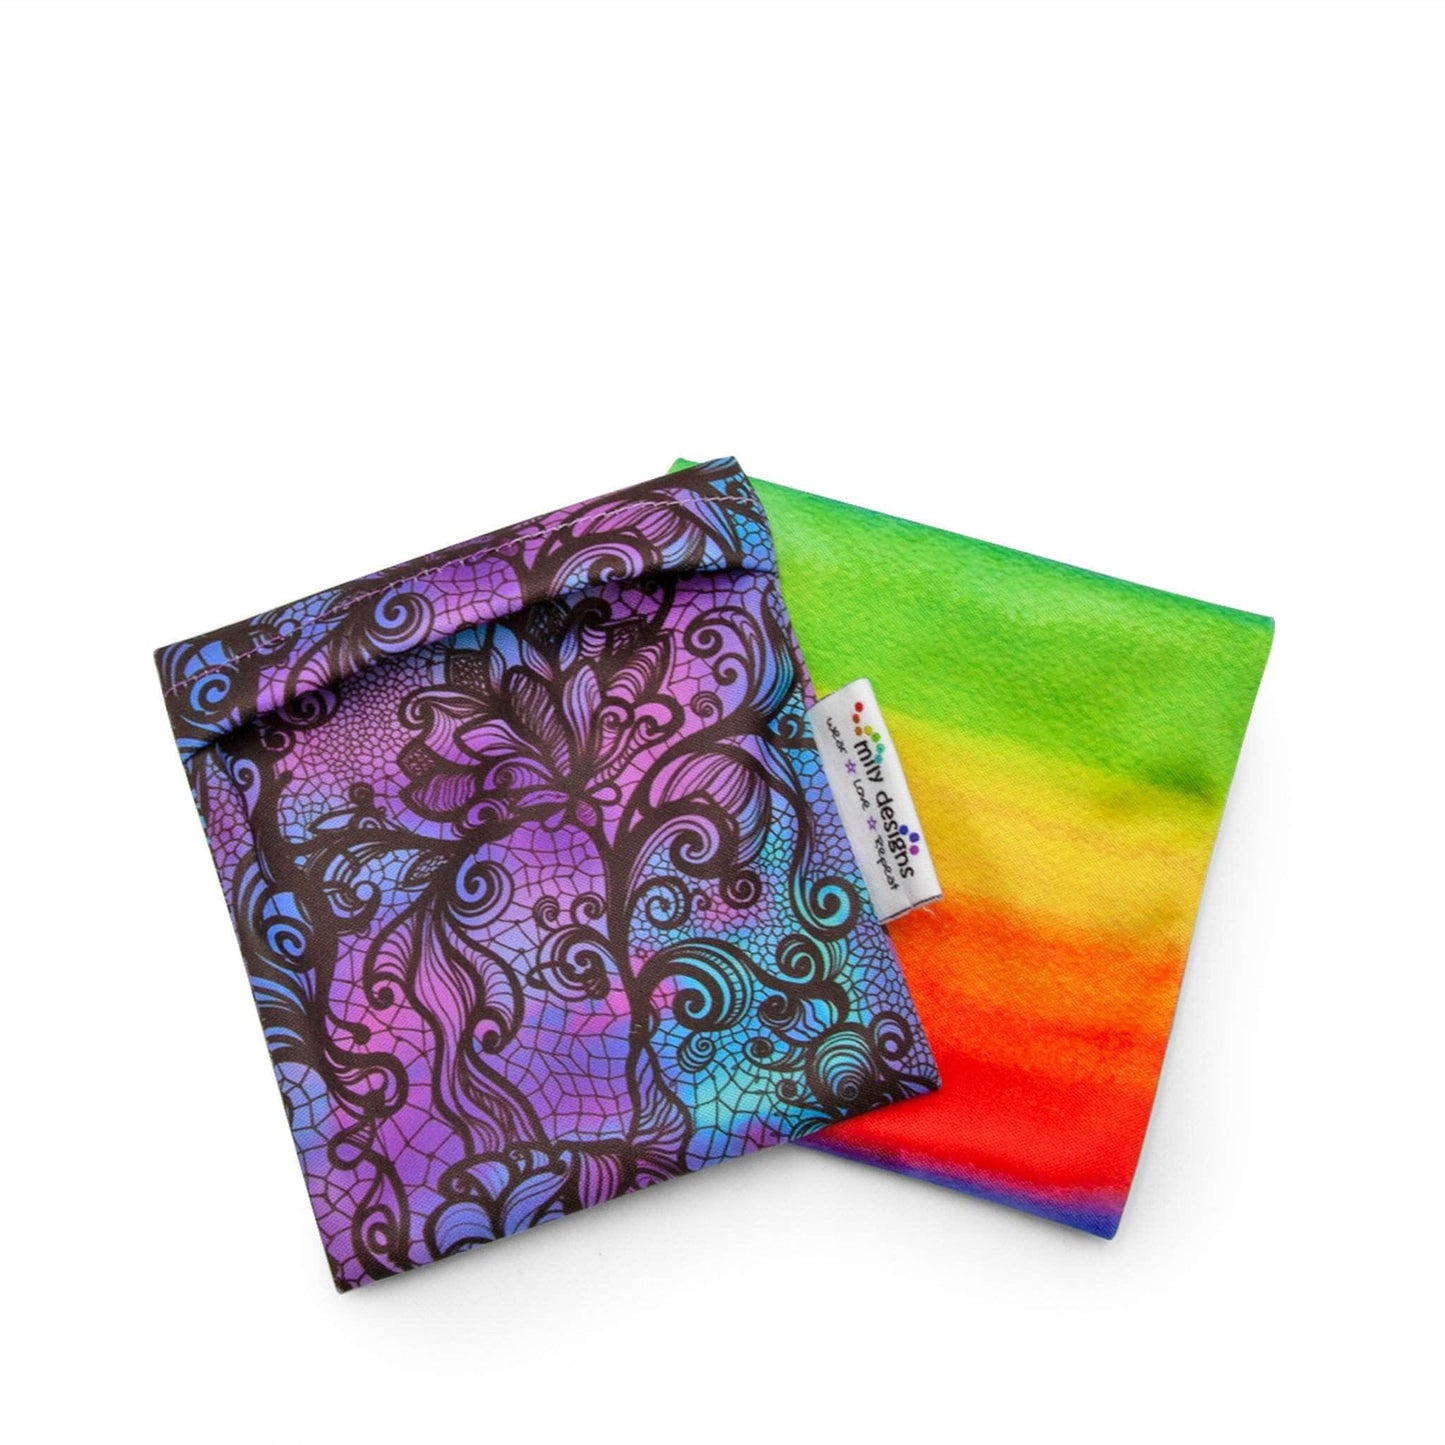 Mily Designs Period Products Mily Designs Reusable Menstrual Pad Wrapper / Wet Bag - Surprise Prints